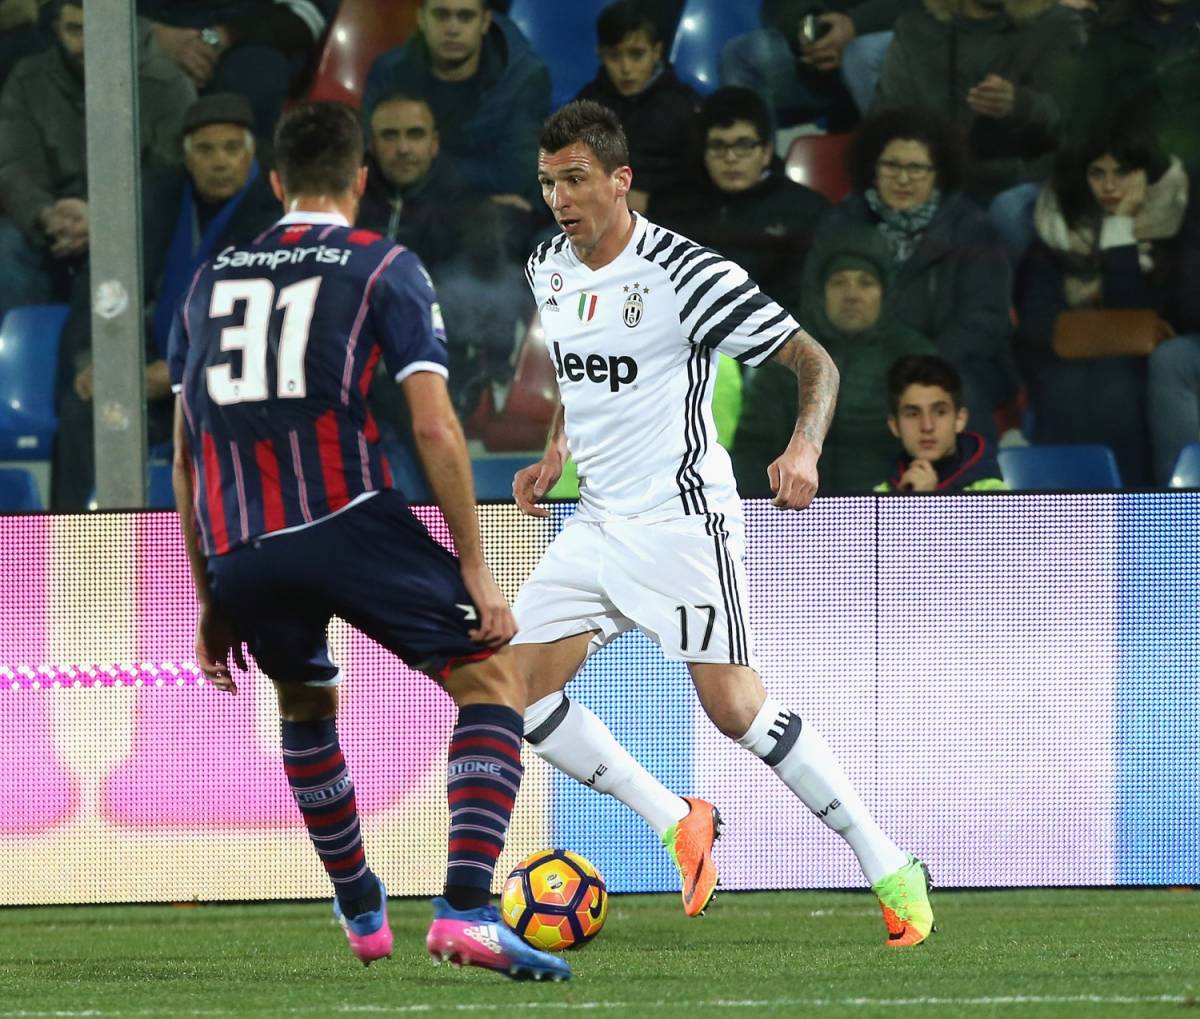 Mandzukic-Higuain, la Juventus batte il Crotone: bianconeri a +7 sulla Roma